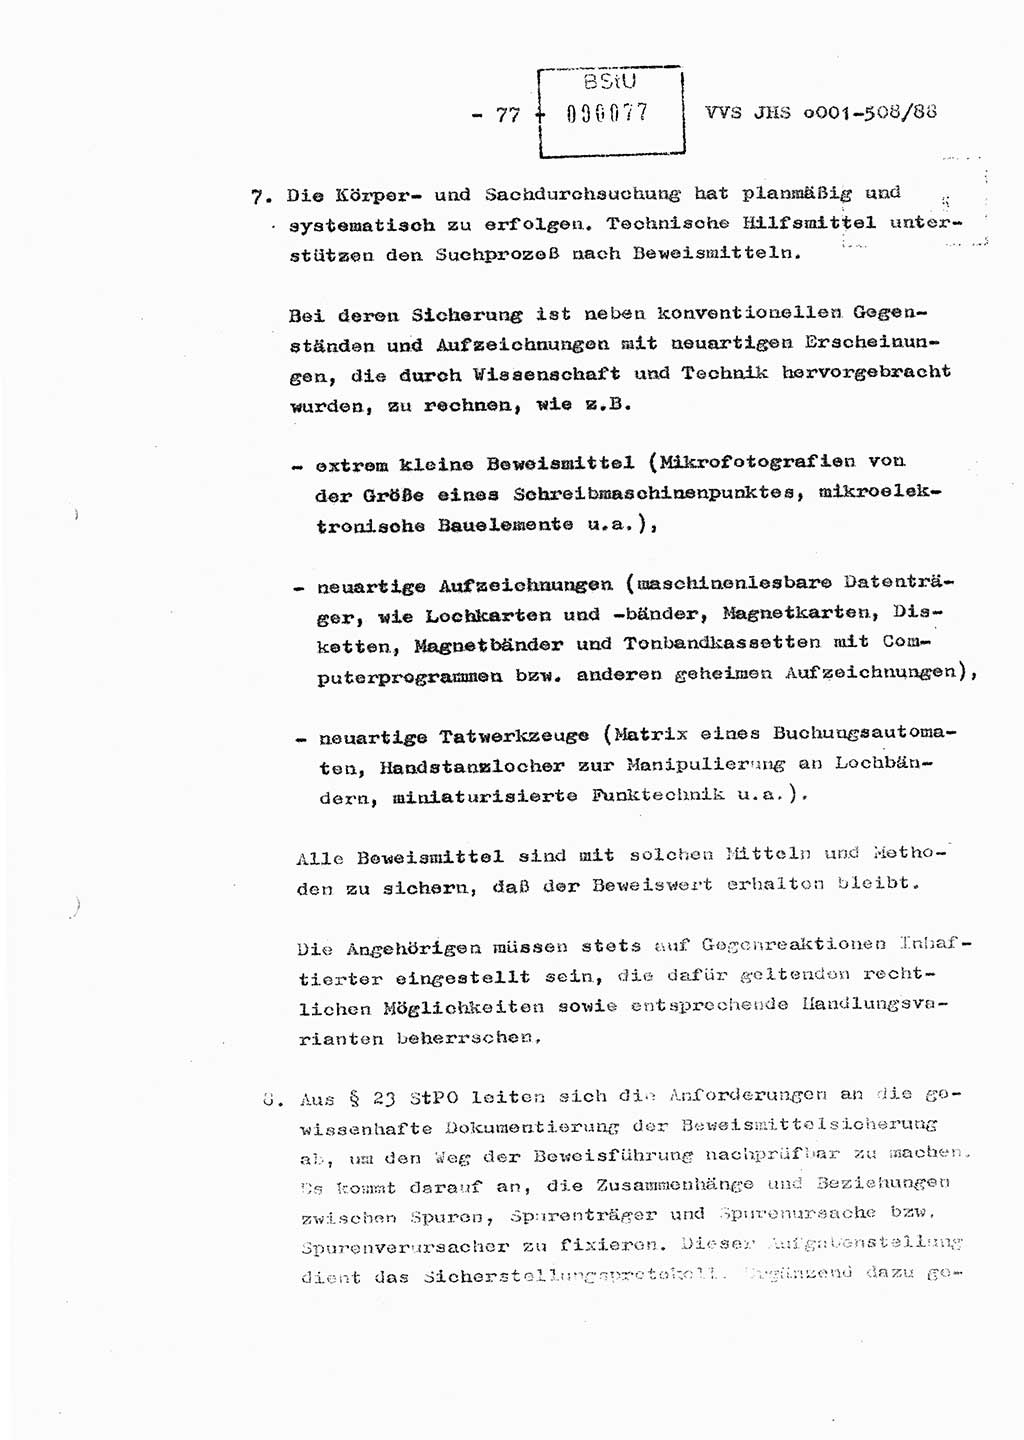 Diplomarbeit Hauptmann Christian Kätzel (Abt. ⅩⅣ), Ministerium für Staatssicherheit (MfS) [Deutsche Demokratische Republik (DDR)], Juristische Hochschule (JHS), Vertrauliche Verschlußsache (VVS) o001-508/88, Potsdam 1988, Blatt 77 (Dipl.-Arb. MfS DDR JHS VVS o001-508/88 1988, Bl. 77)